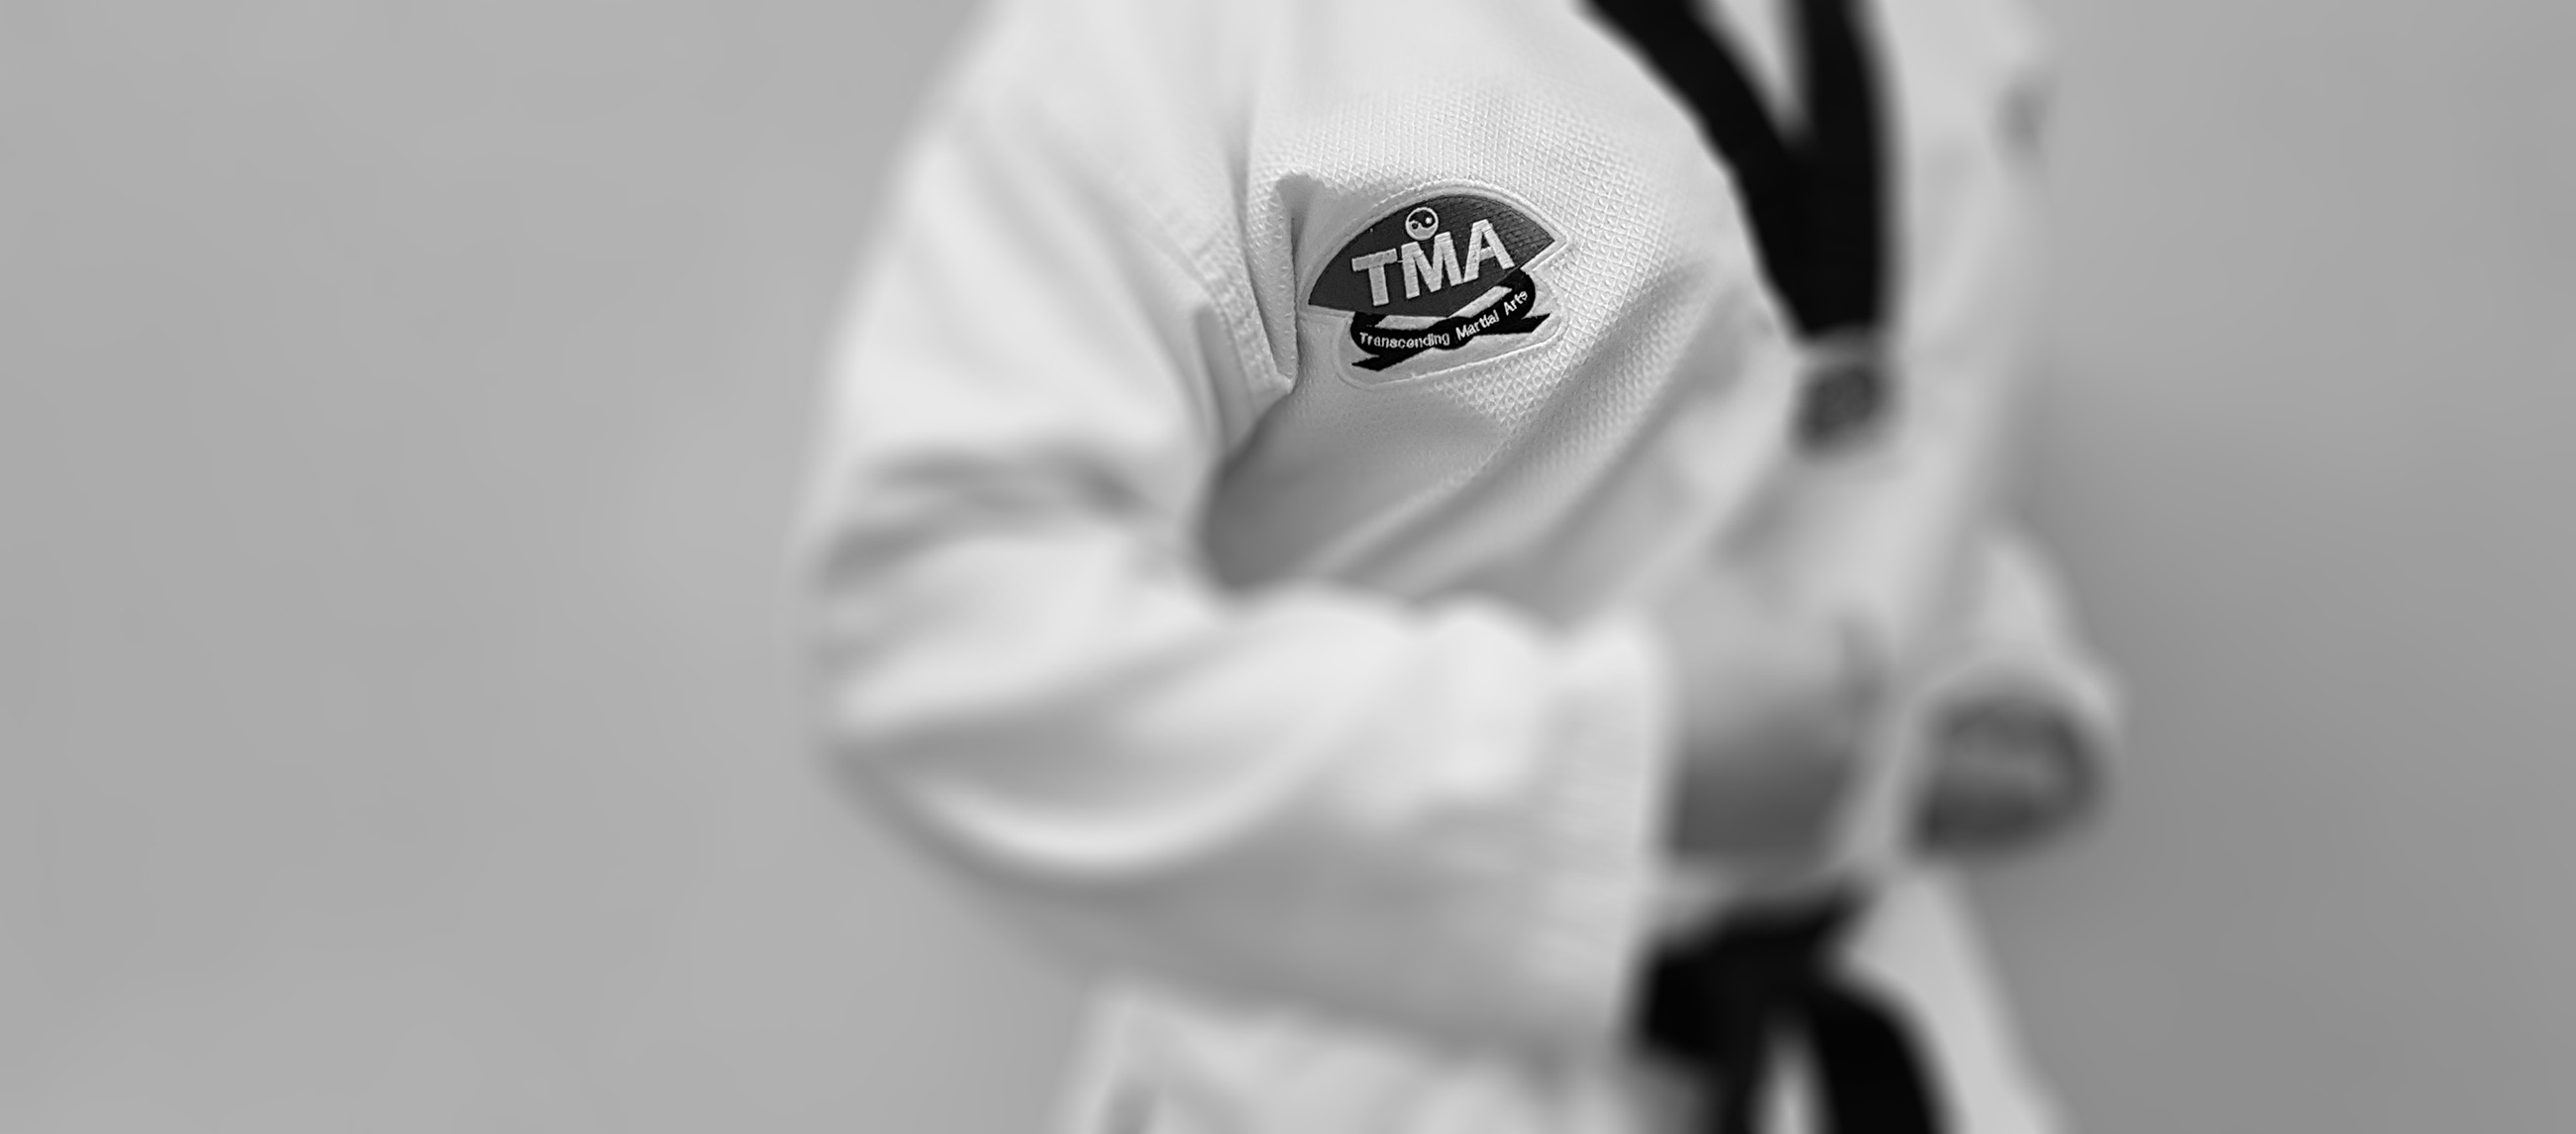 Person in Taekwondo uniform showing Transcending Martial Arts logo on chest